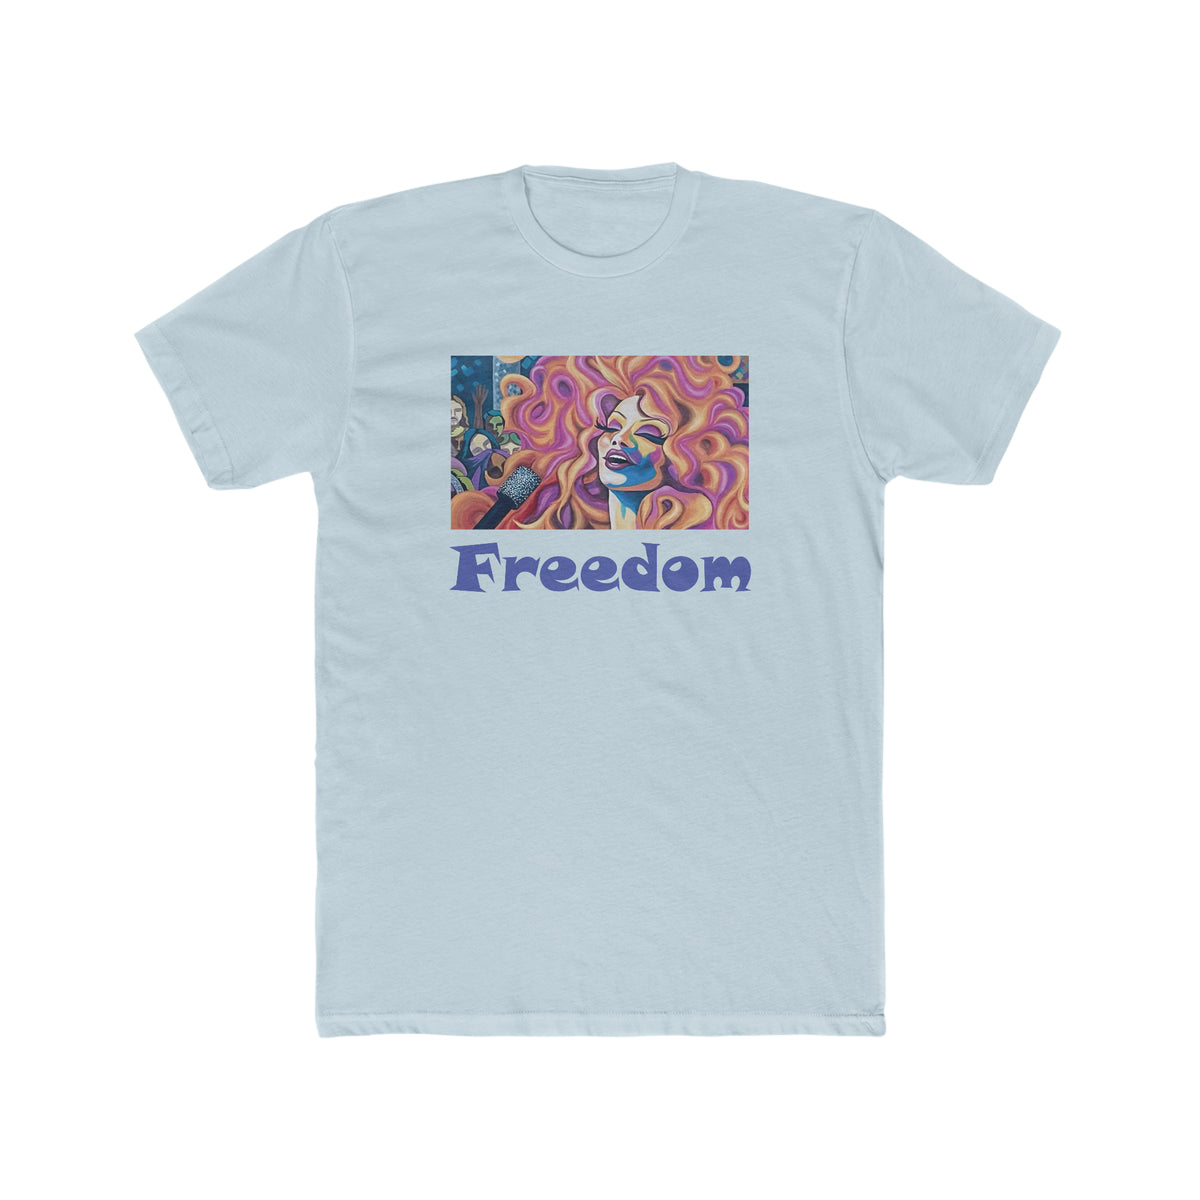 Freedom by India Brooks - Tee - Twisted Jezebel